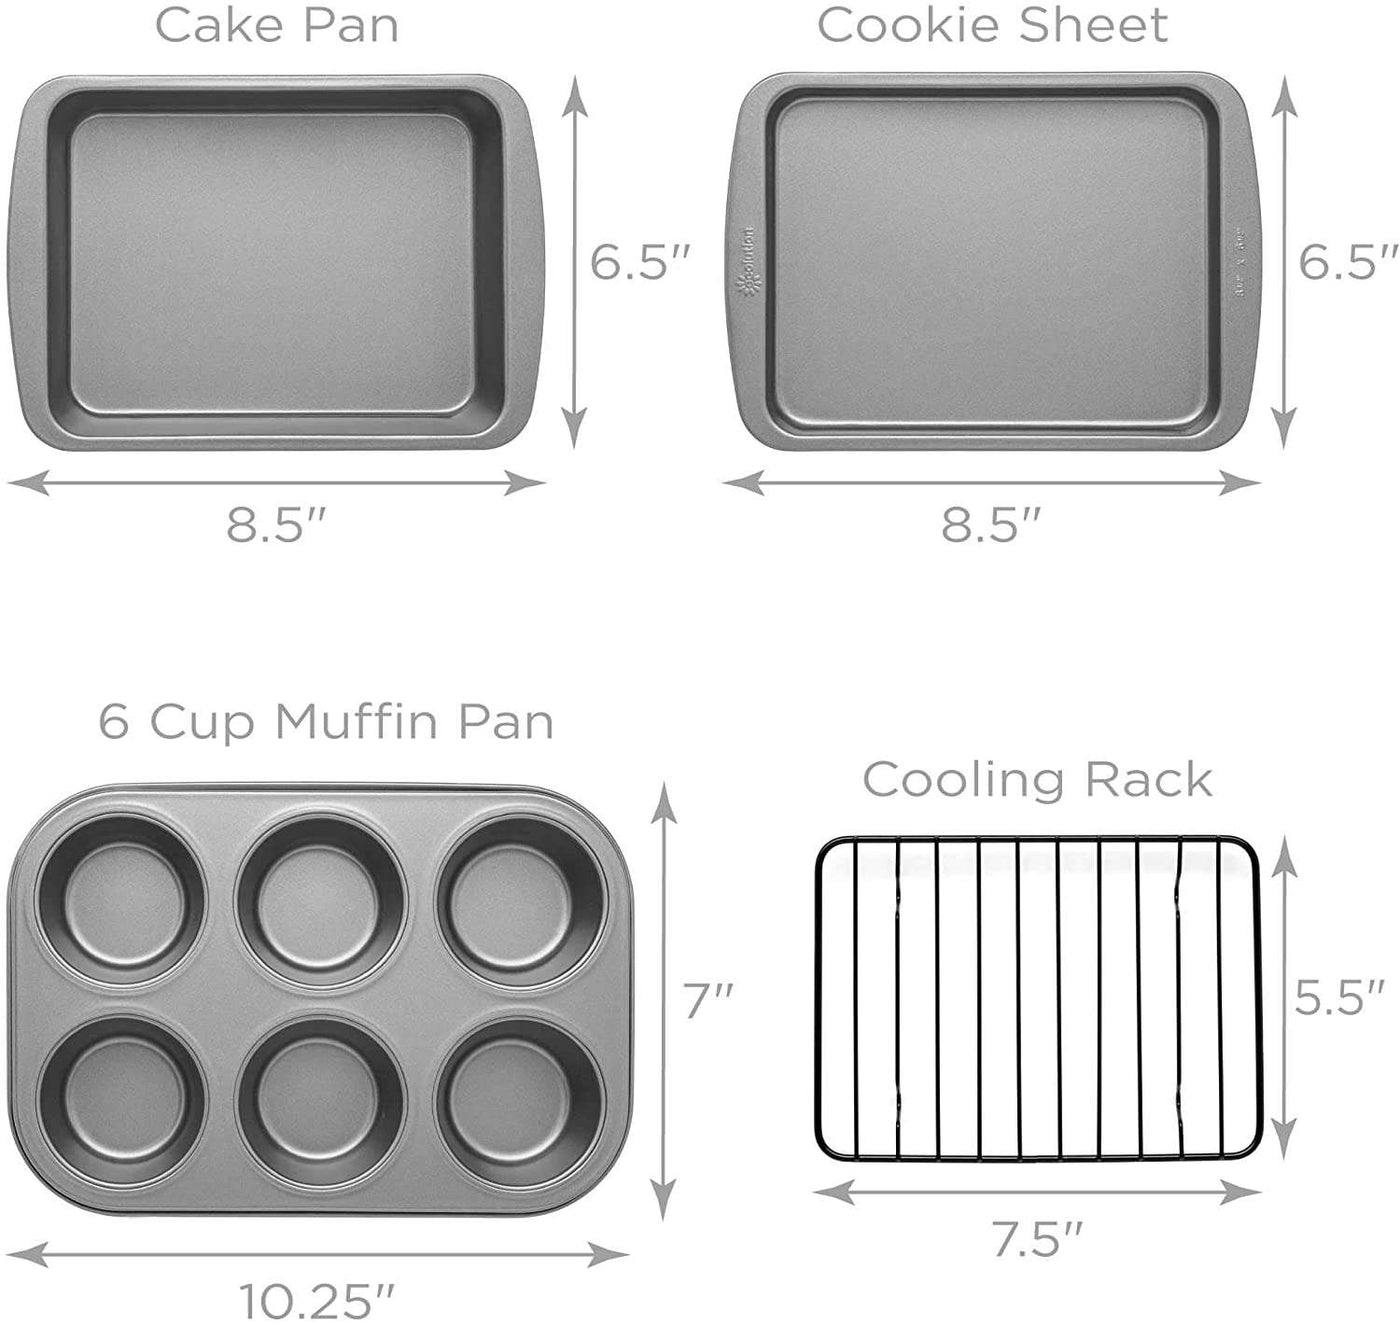 Ecolution Bakeins 3 Piece Cookie Sheet Set